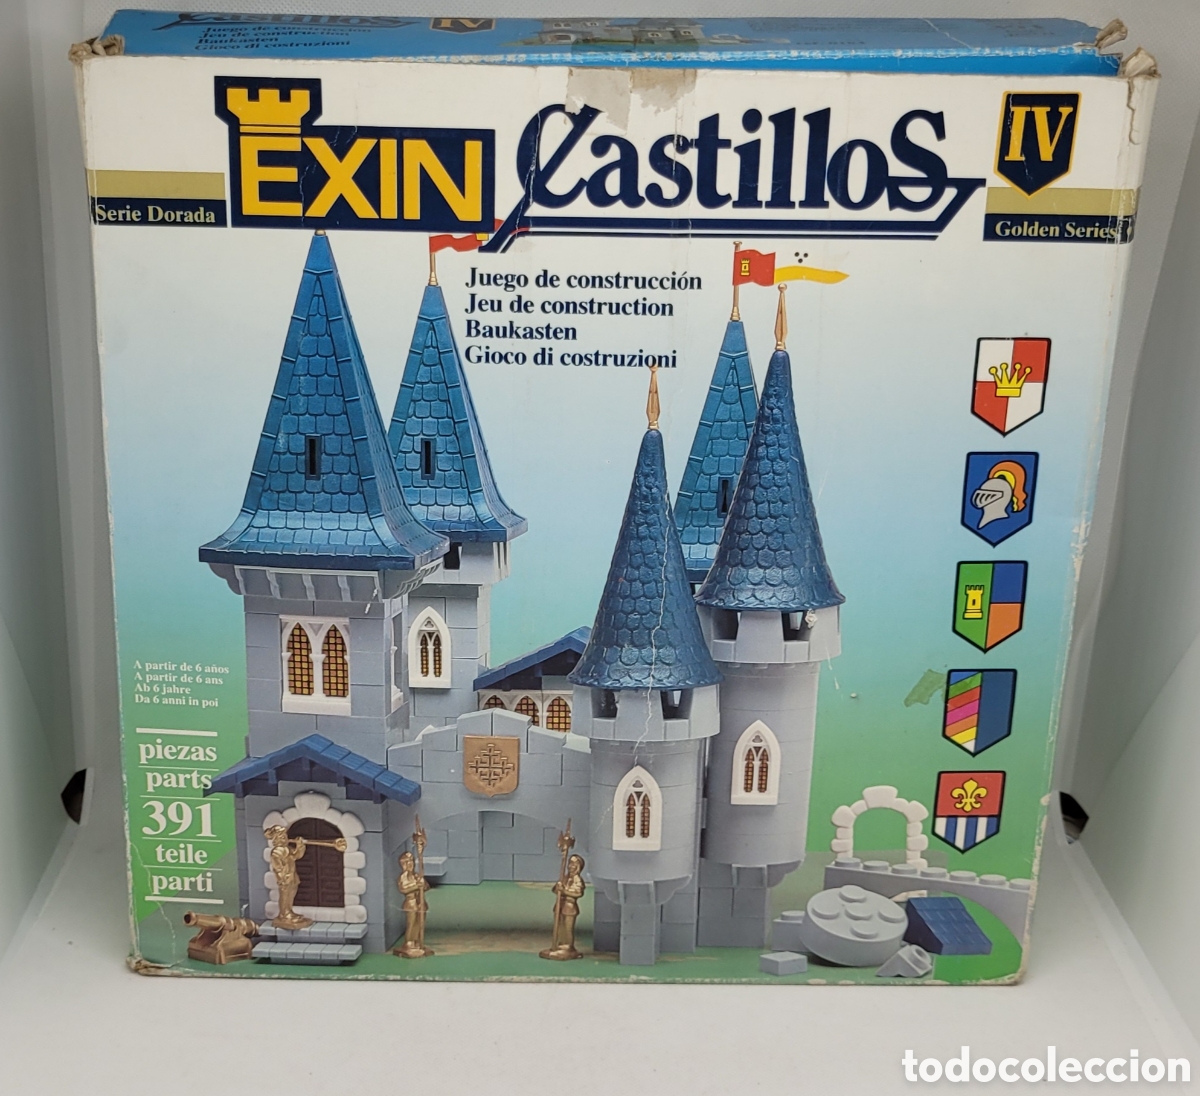 exin castillos iv serie golden. ref 0184. edici - Buy Antique toys from the  brand Exin on todocoleccion